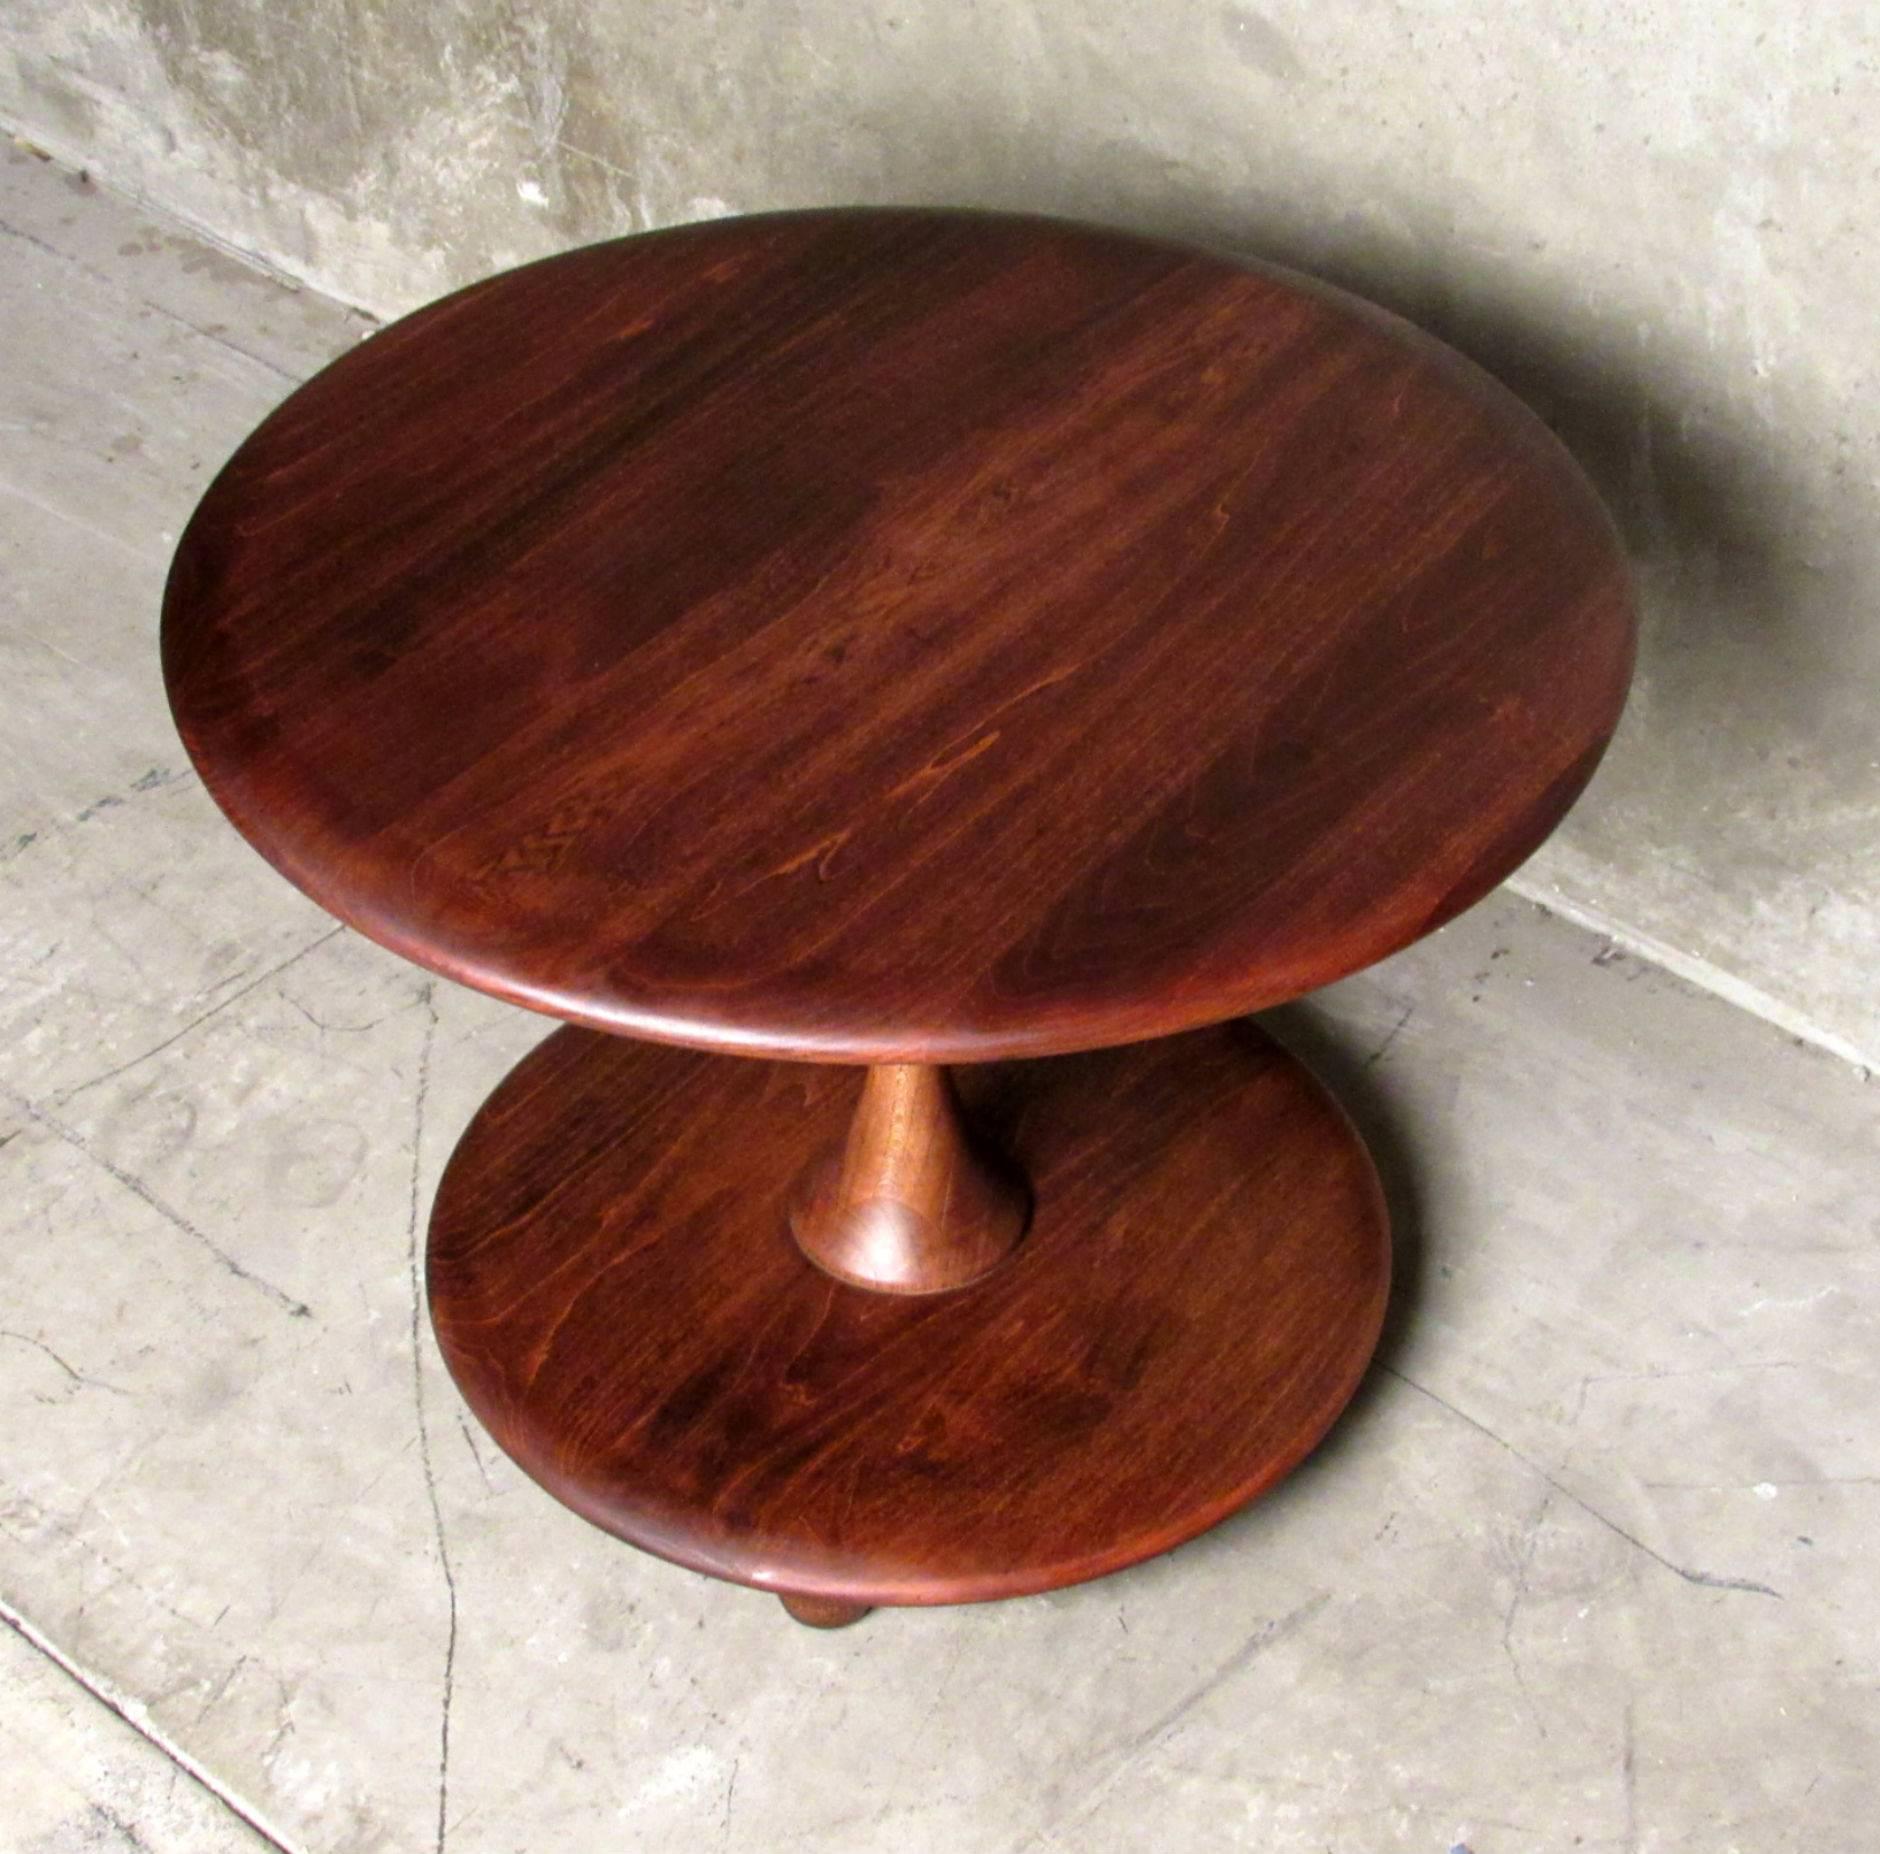 Turned Mid-Century Modern Walnut Table by Lane Furniture 